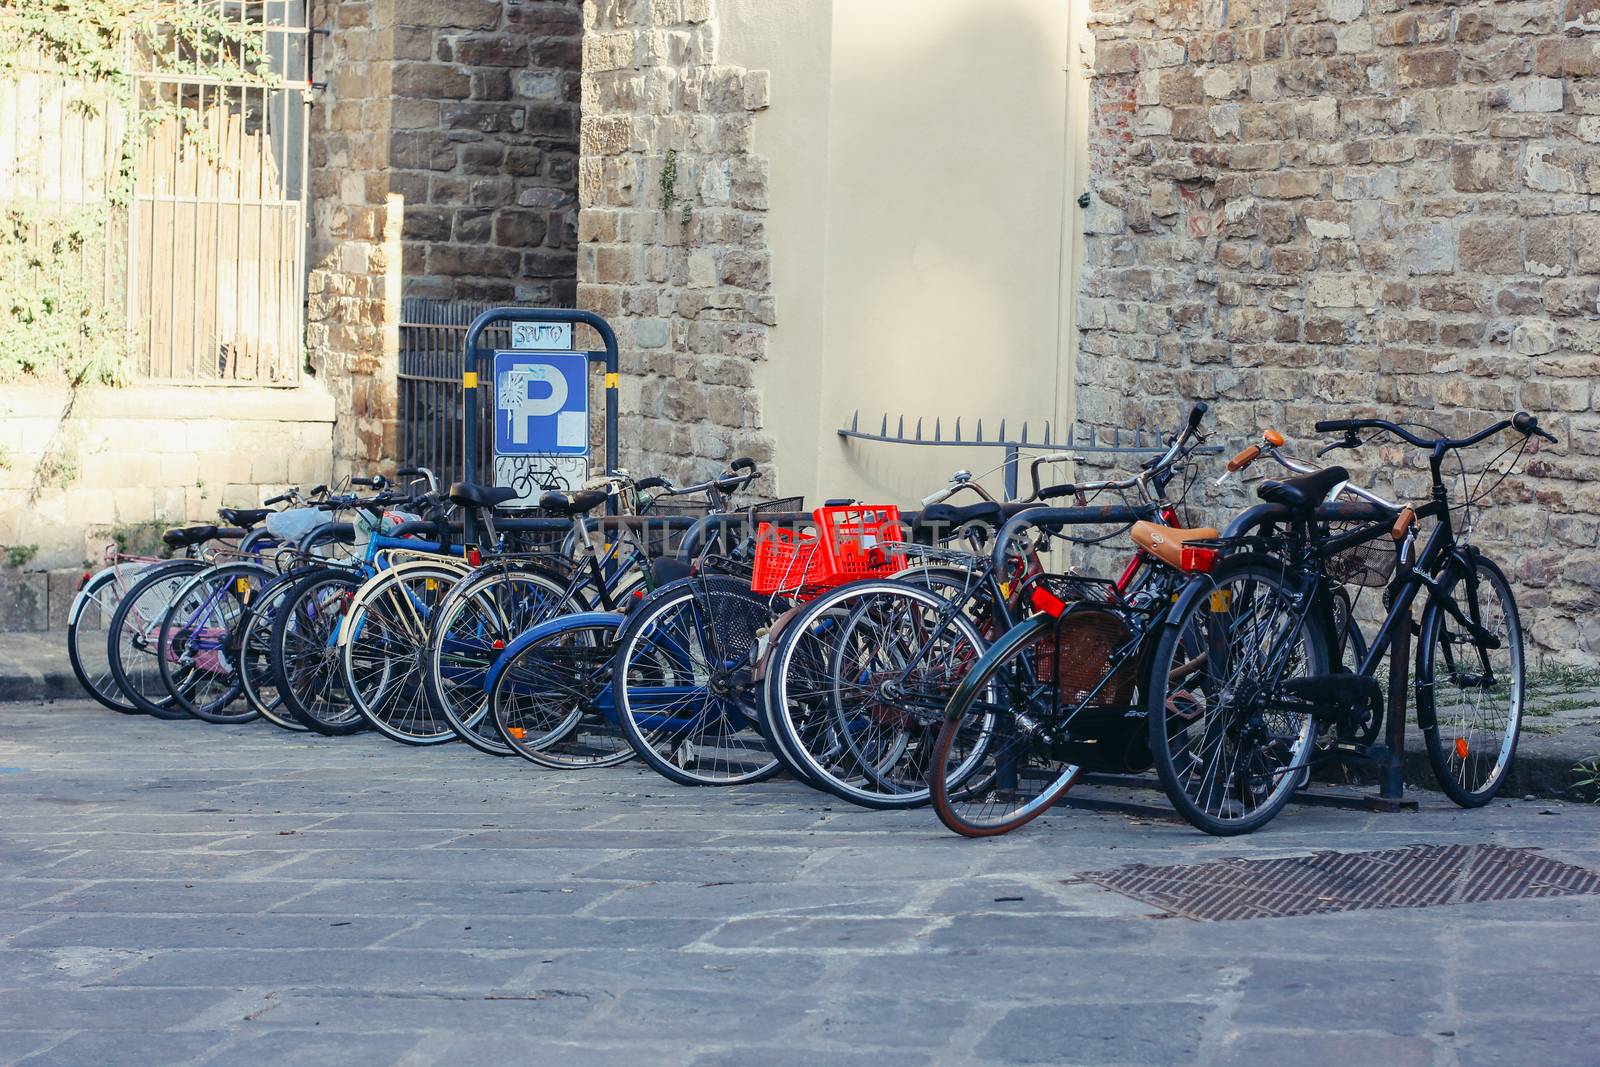 Bicycle parking in Florence by sermax55